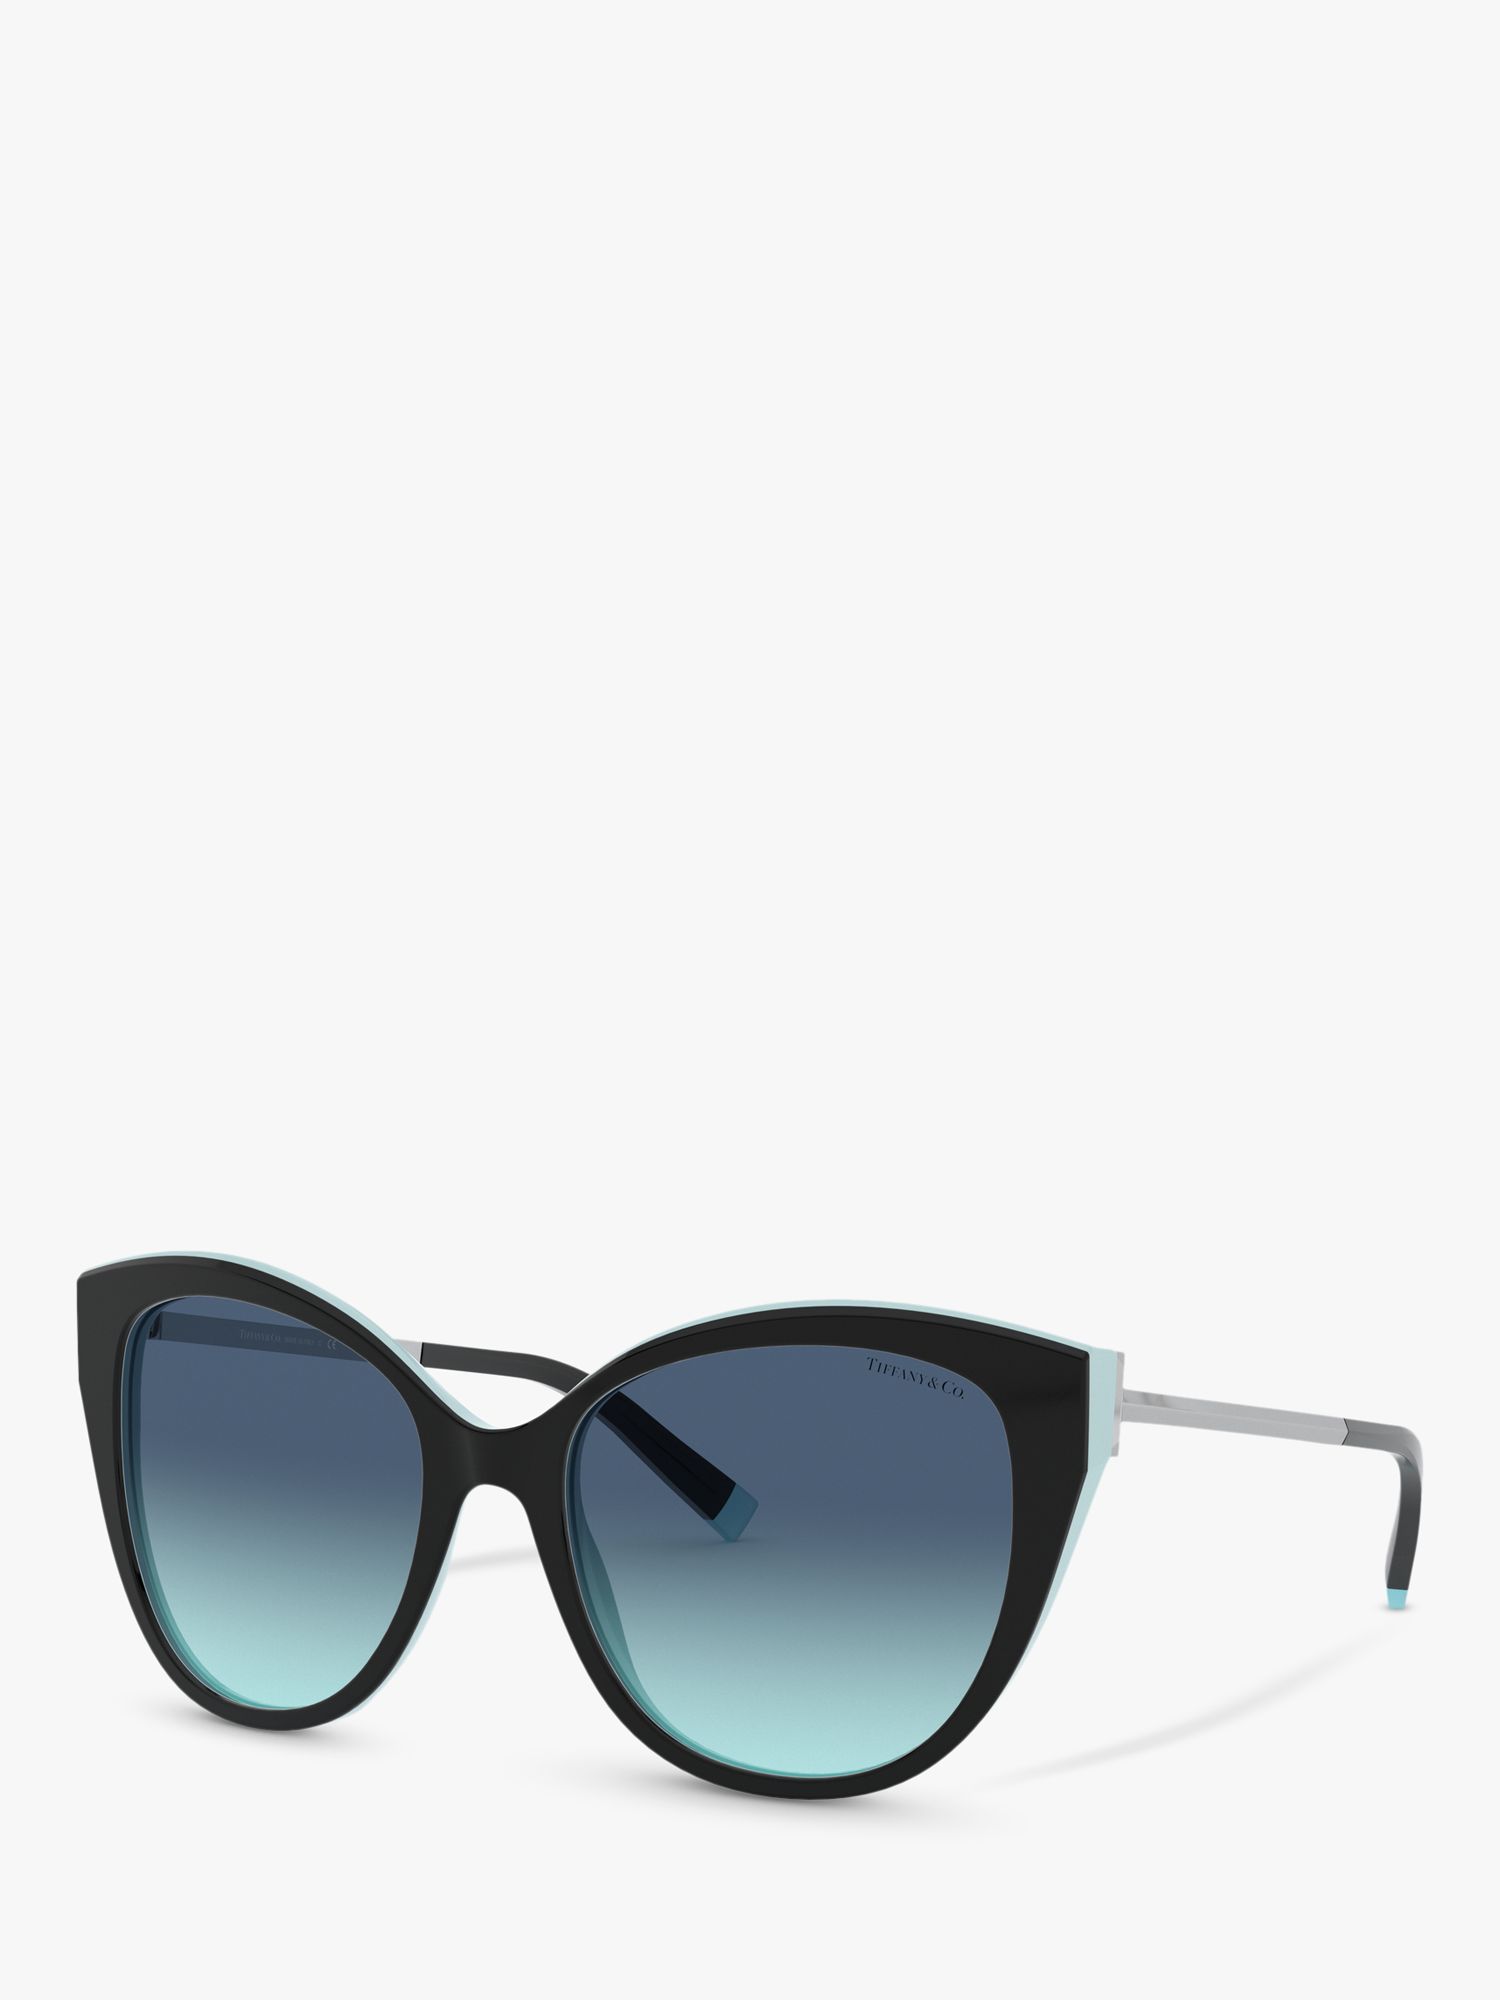 tiffany and co blue sunglasses